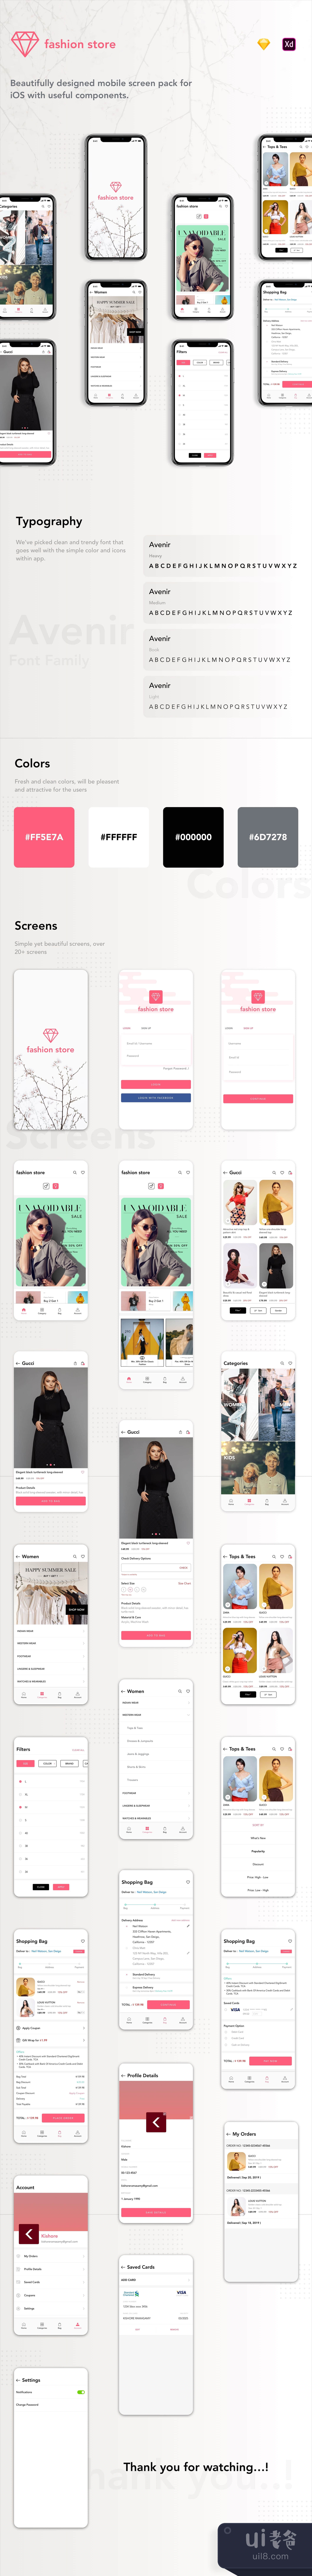 时尚商店iOS UI Kit (Fashion Store iOS UI Kit)插图